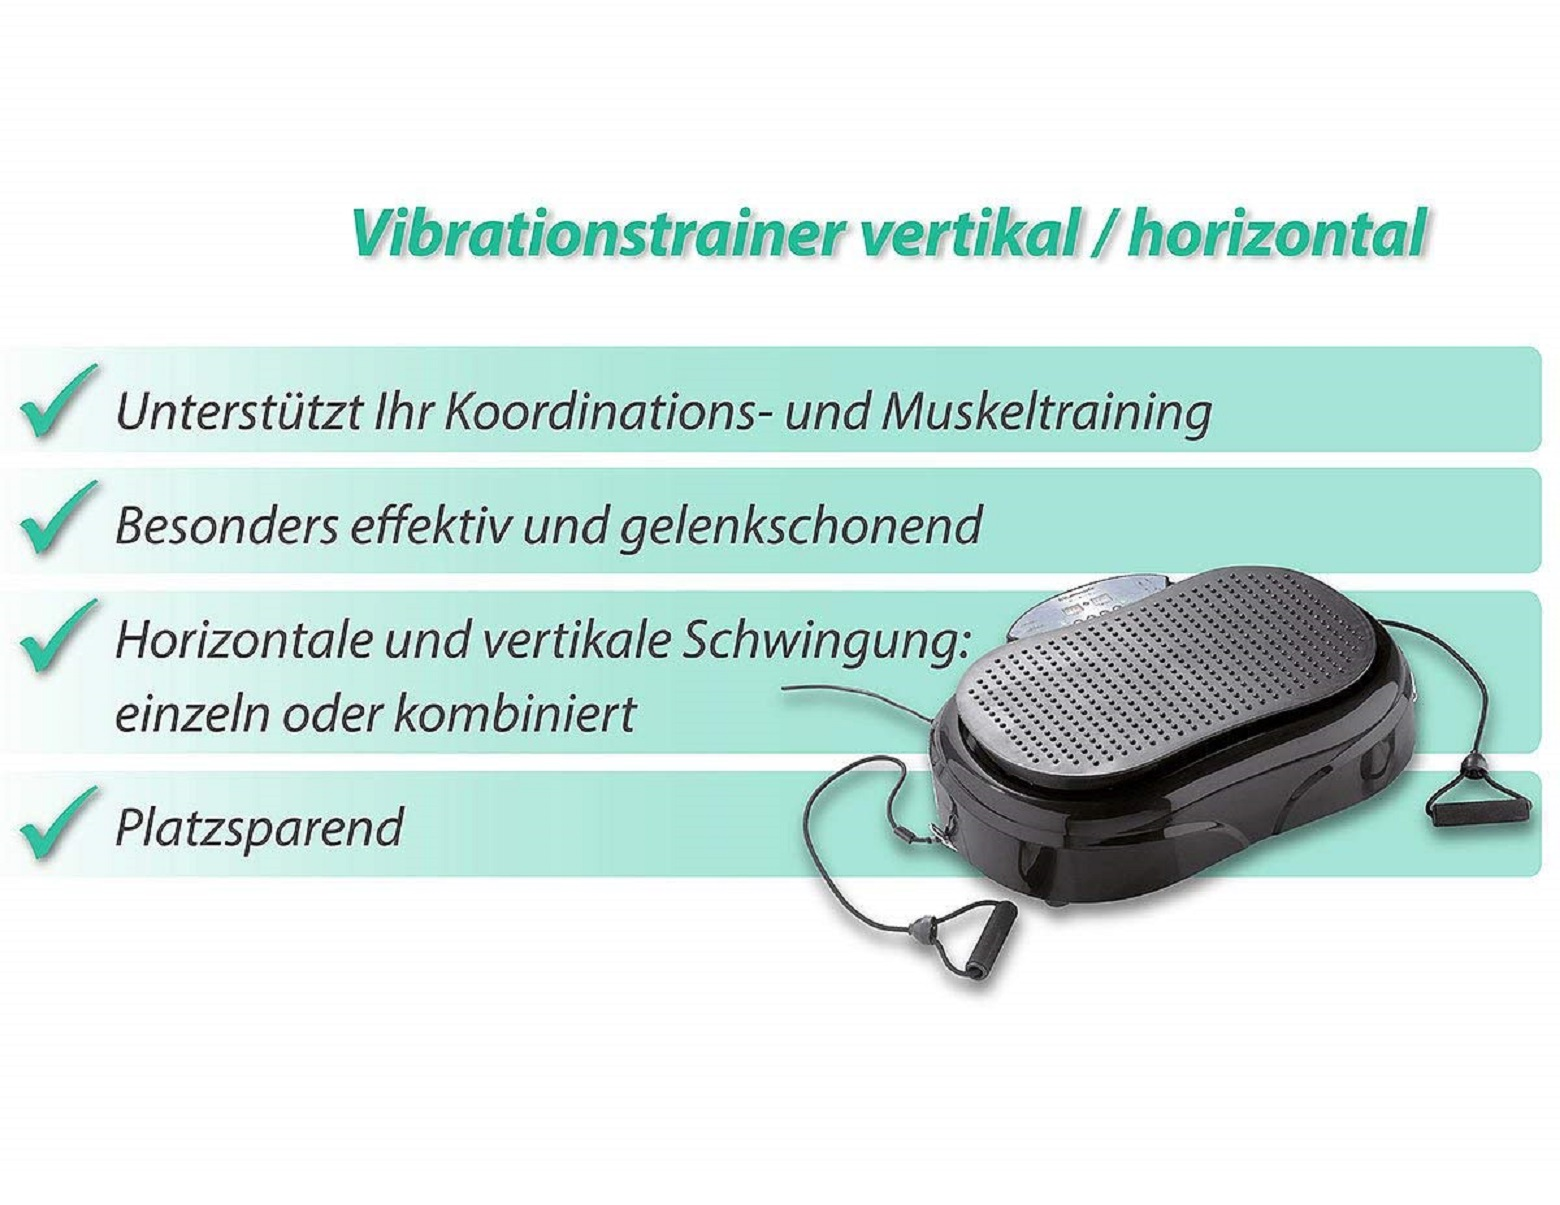 NEWGEN schwarz MEDICALS Vibrationstrainer, mit Vibrationsplatte Expander